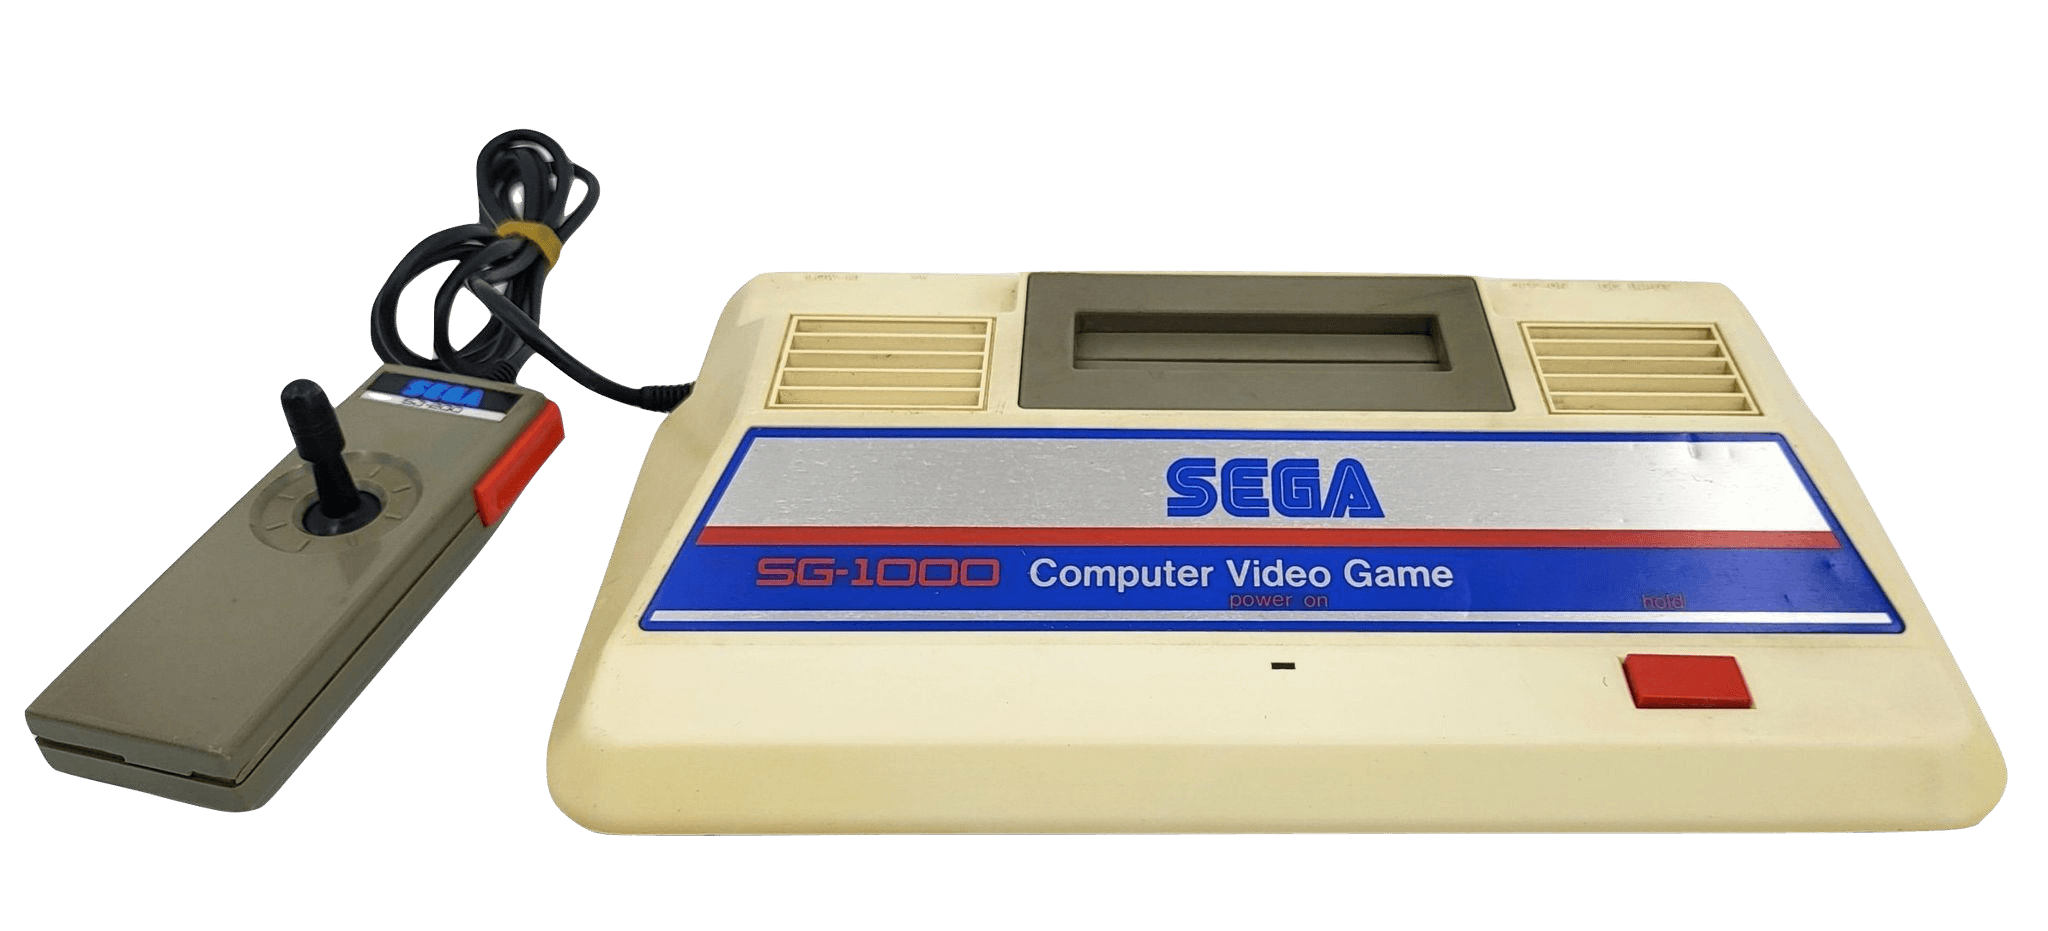 HomeComputerMuseum - Sega SG-1000